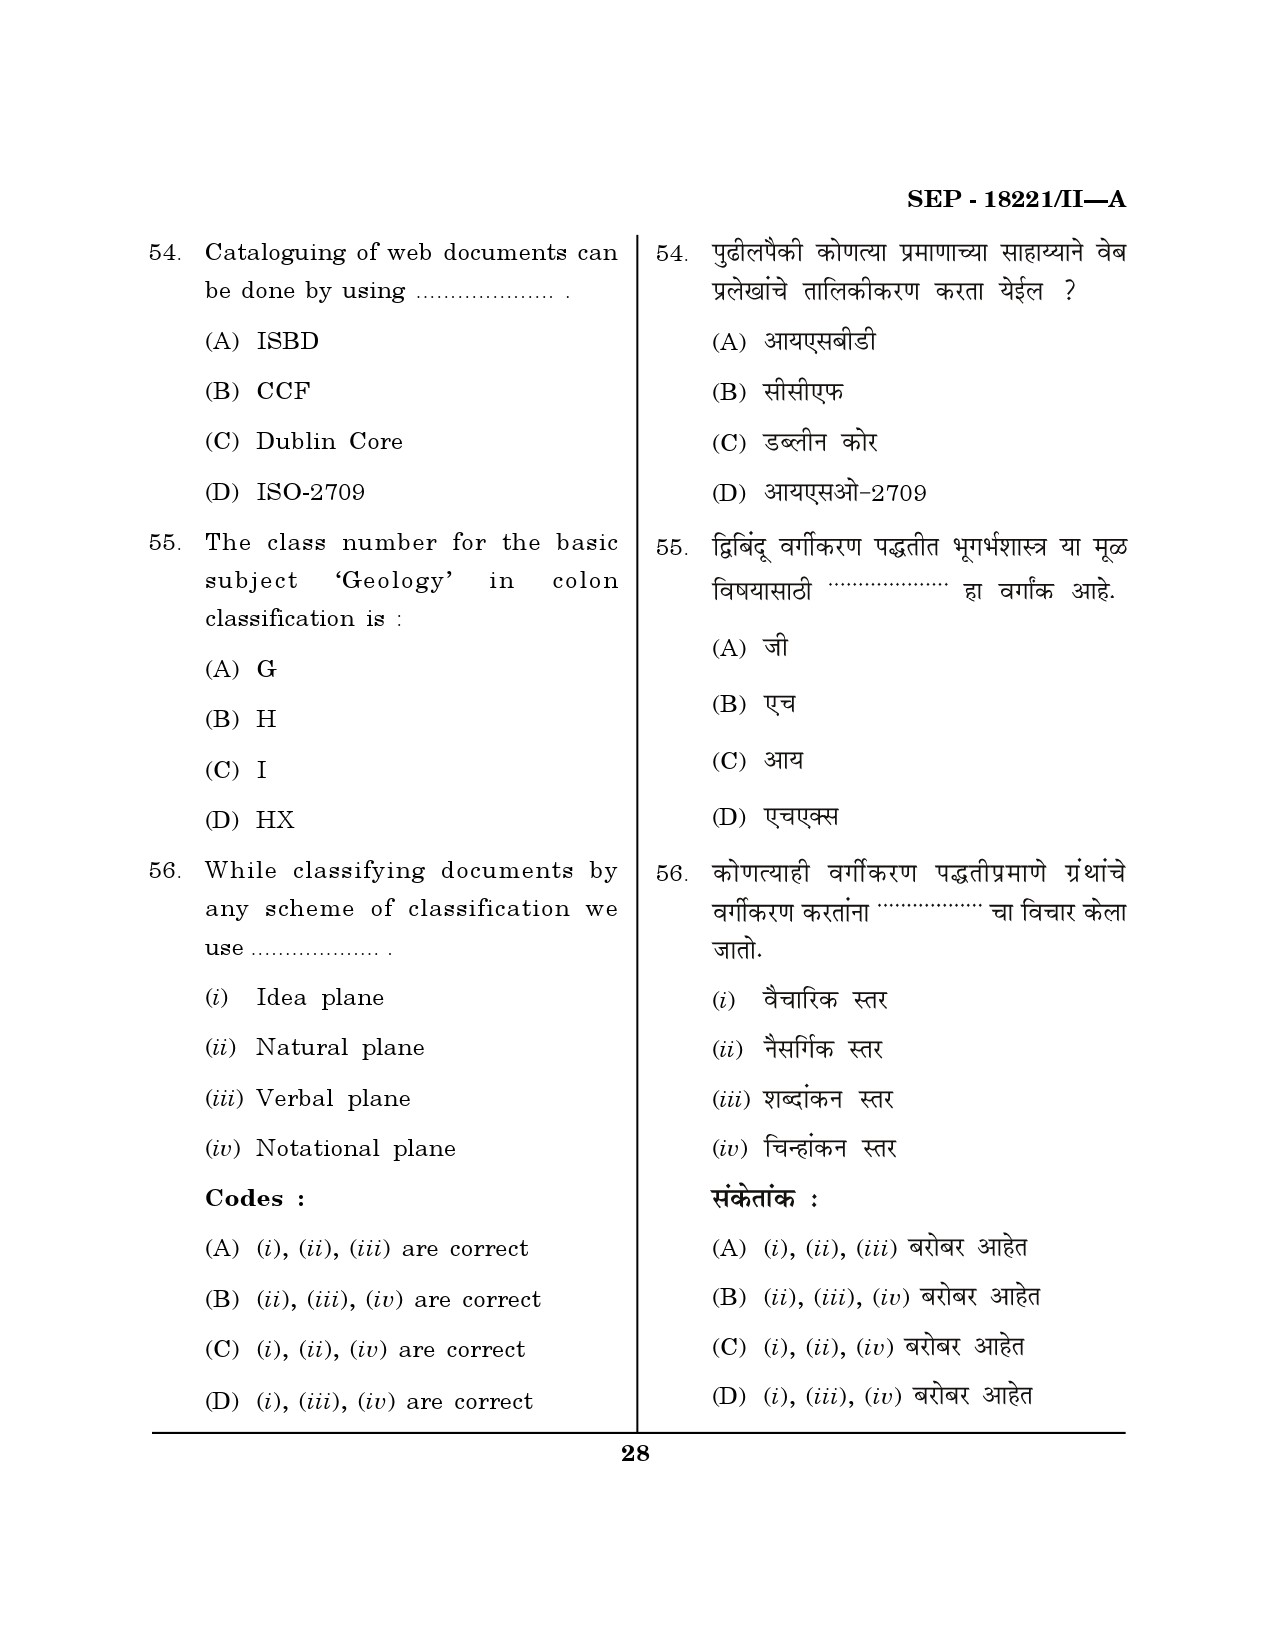 Maharashtra SET Library Information Science Exam Question Paper September 2021 27